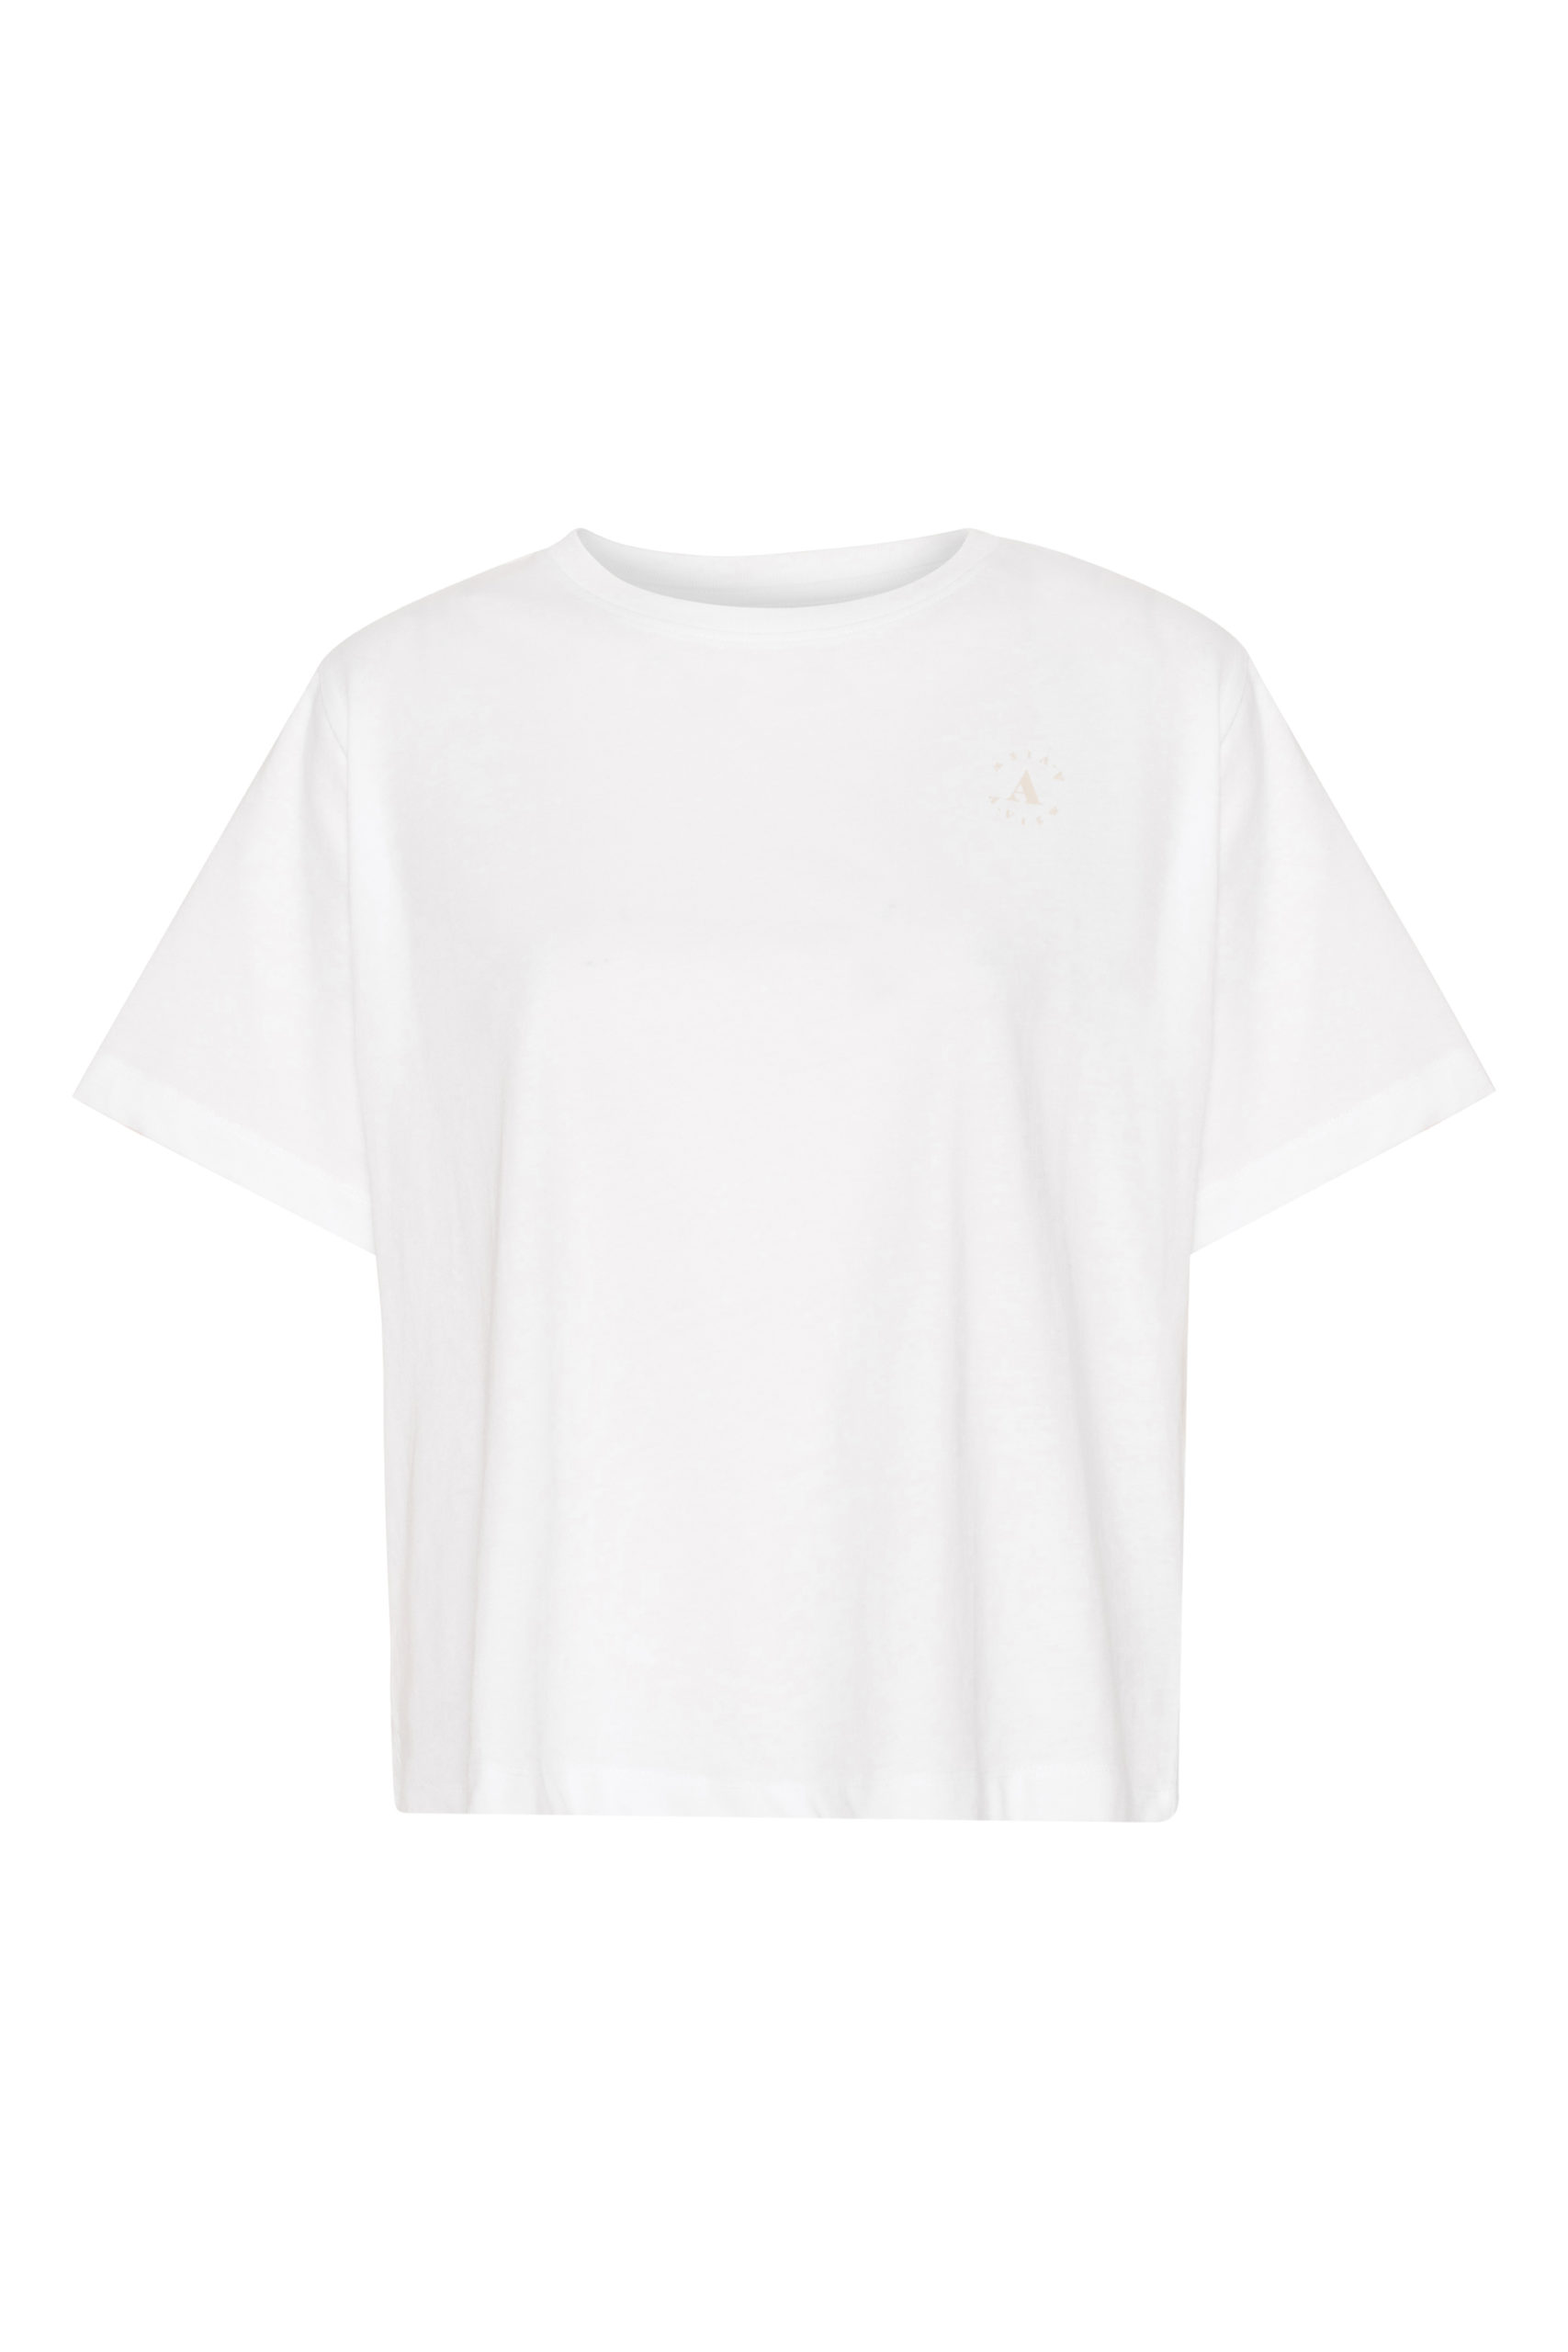 Sila T-Shirt white